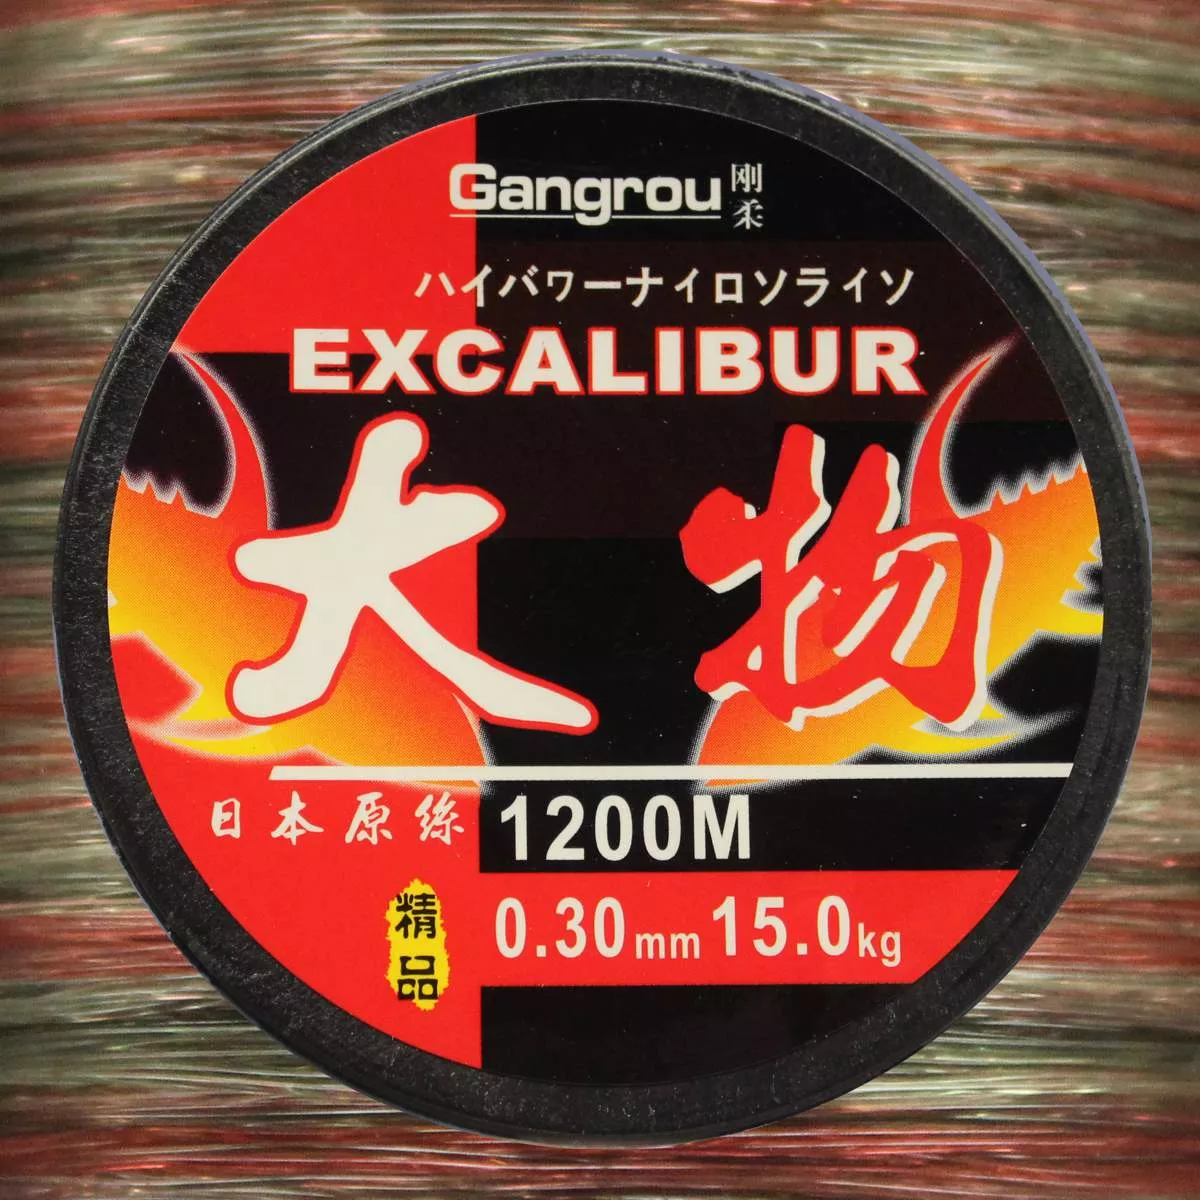 EFT Gangrou Excalibur 0,30mm 15kg 1200m, monofile Angelschnur, mono line